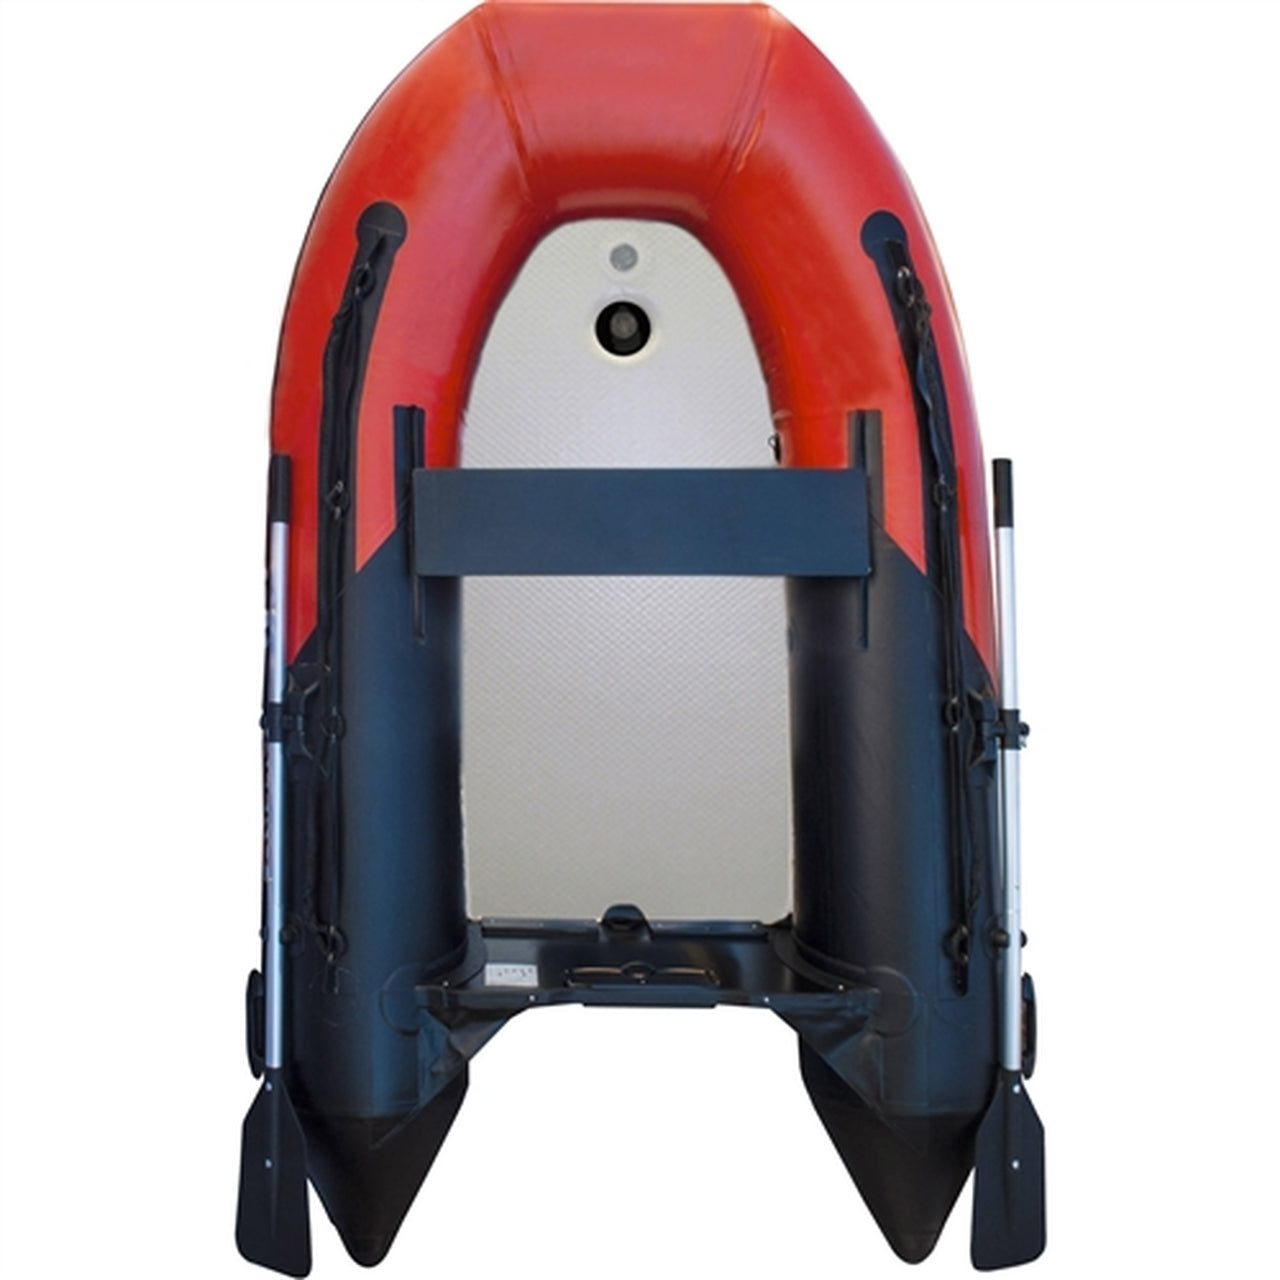 Aleko Boats Inflatable Air Floor Fishing Boat - 8.4 Foot -